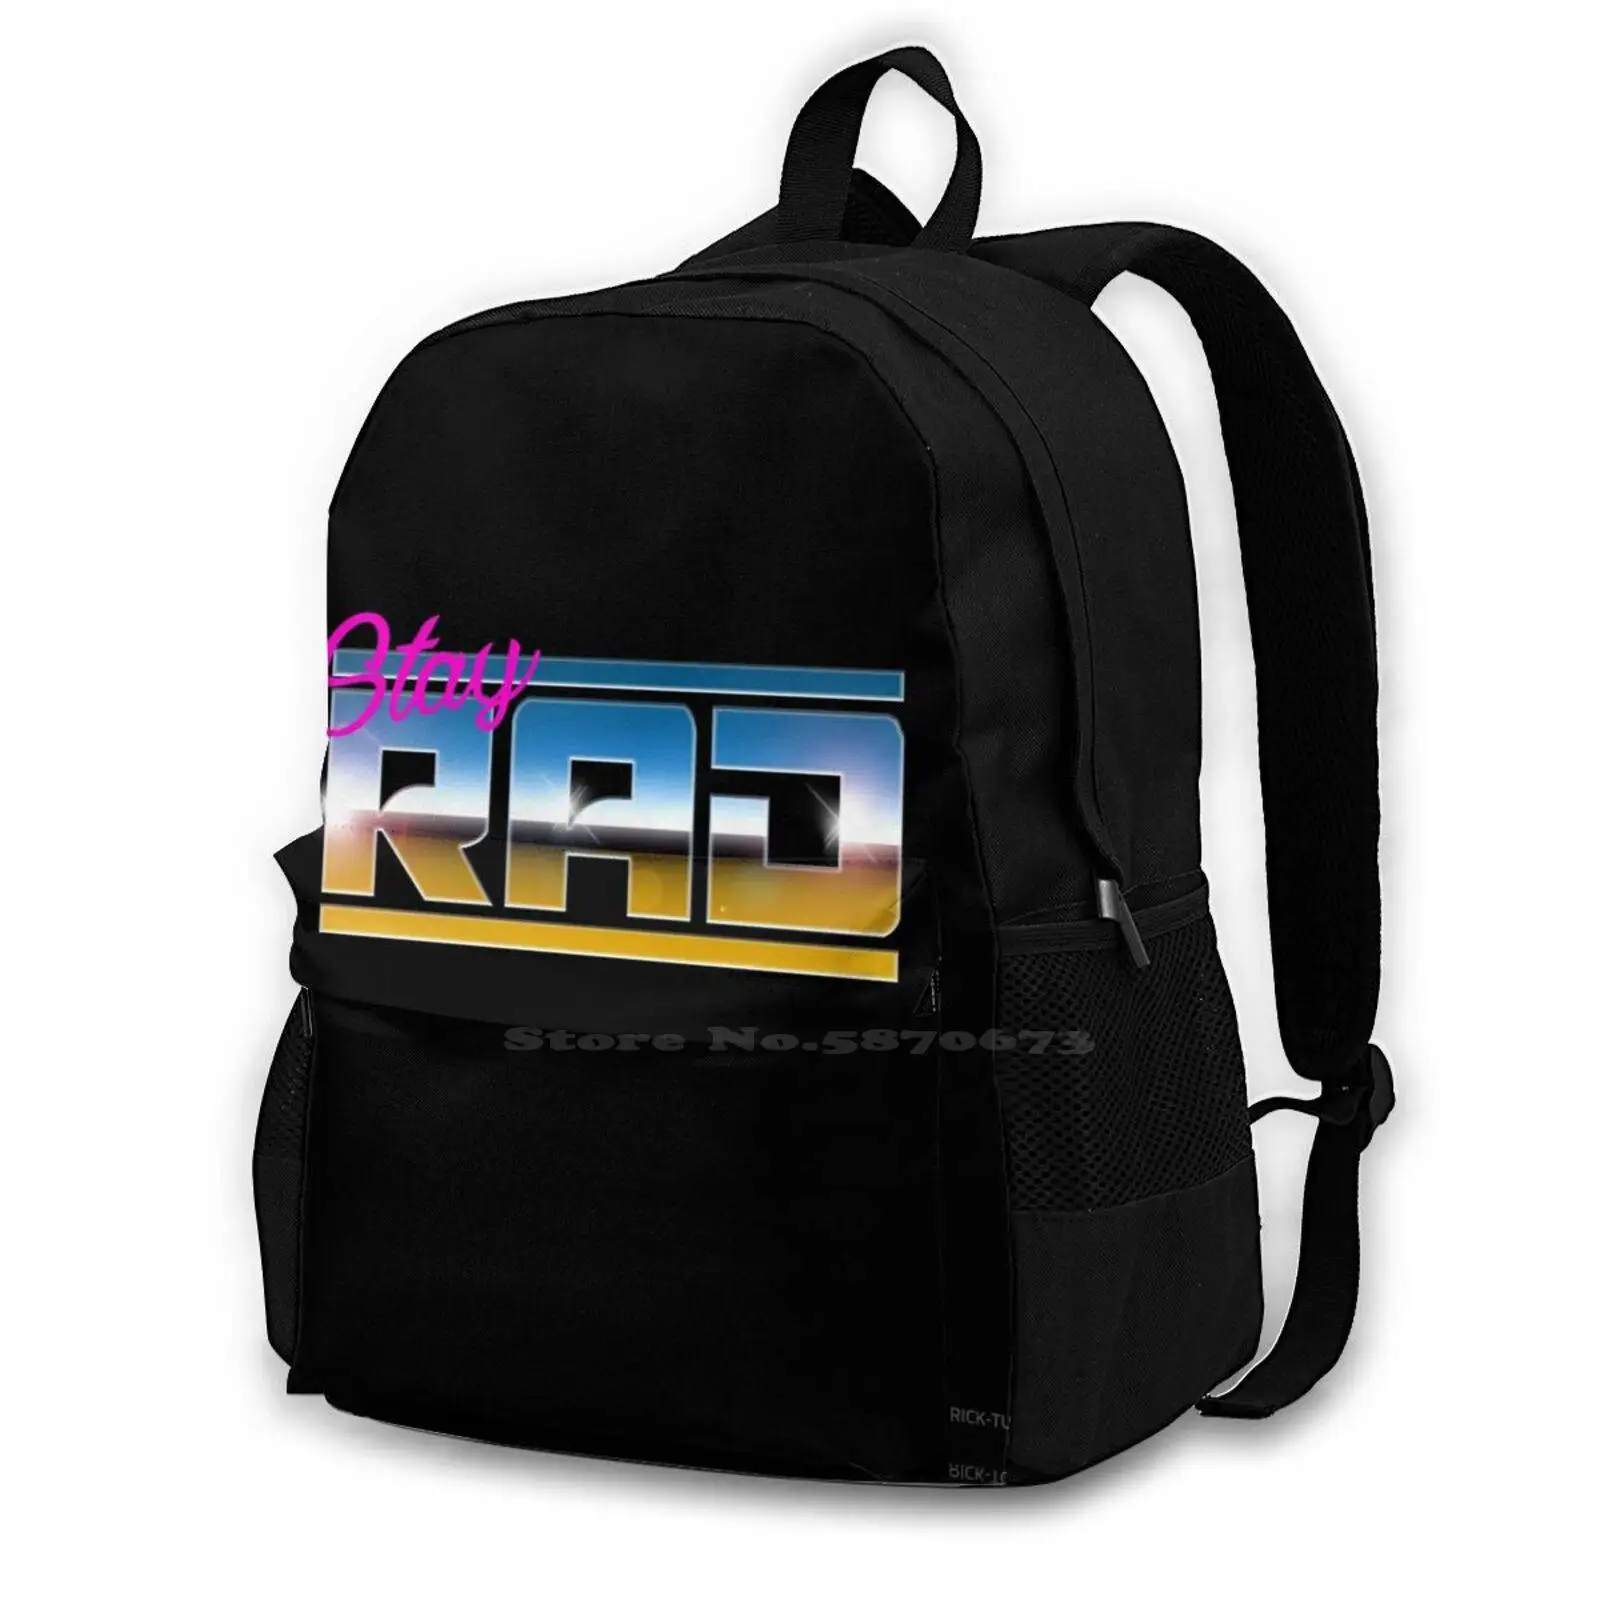 

Stay Rad Fashion Travel Laptop School Backpack Bag Stay Rad Wheel Synthwave Outrun Vapor Vaporwave Chillwave Radical 80S 80Stv